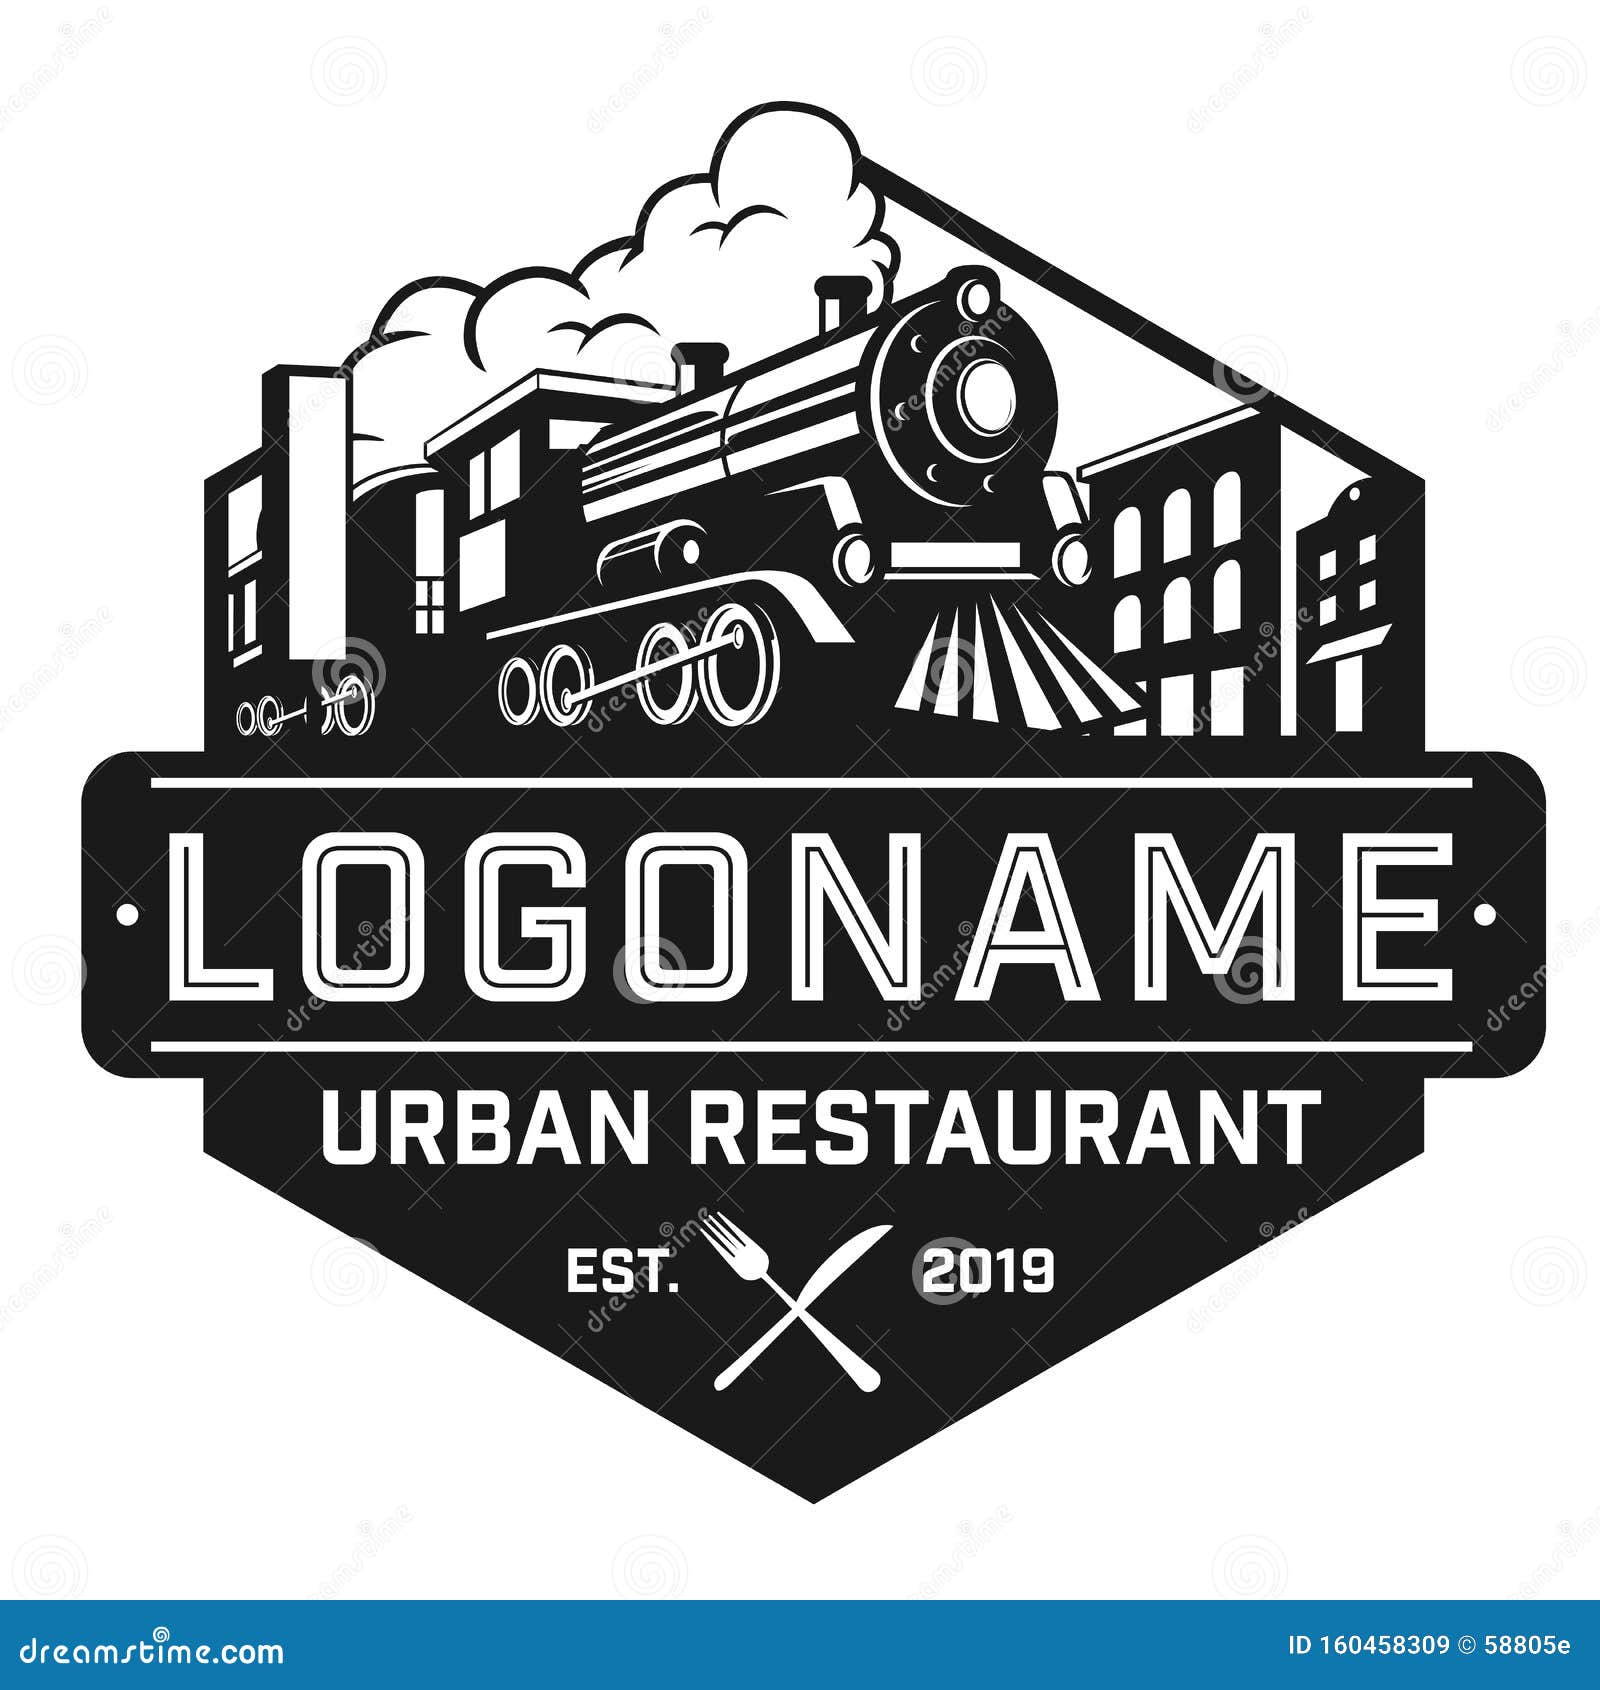 urban restaurants logo 